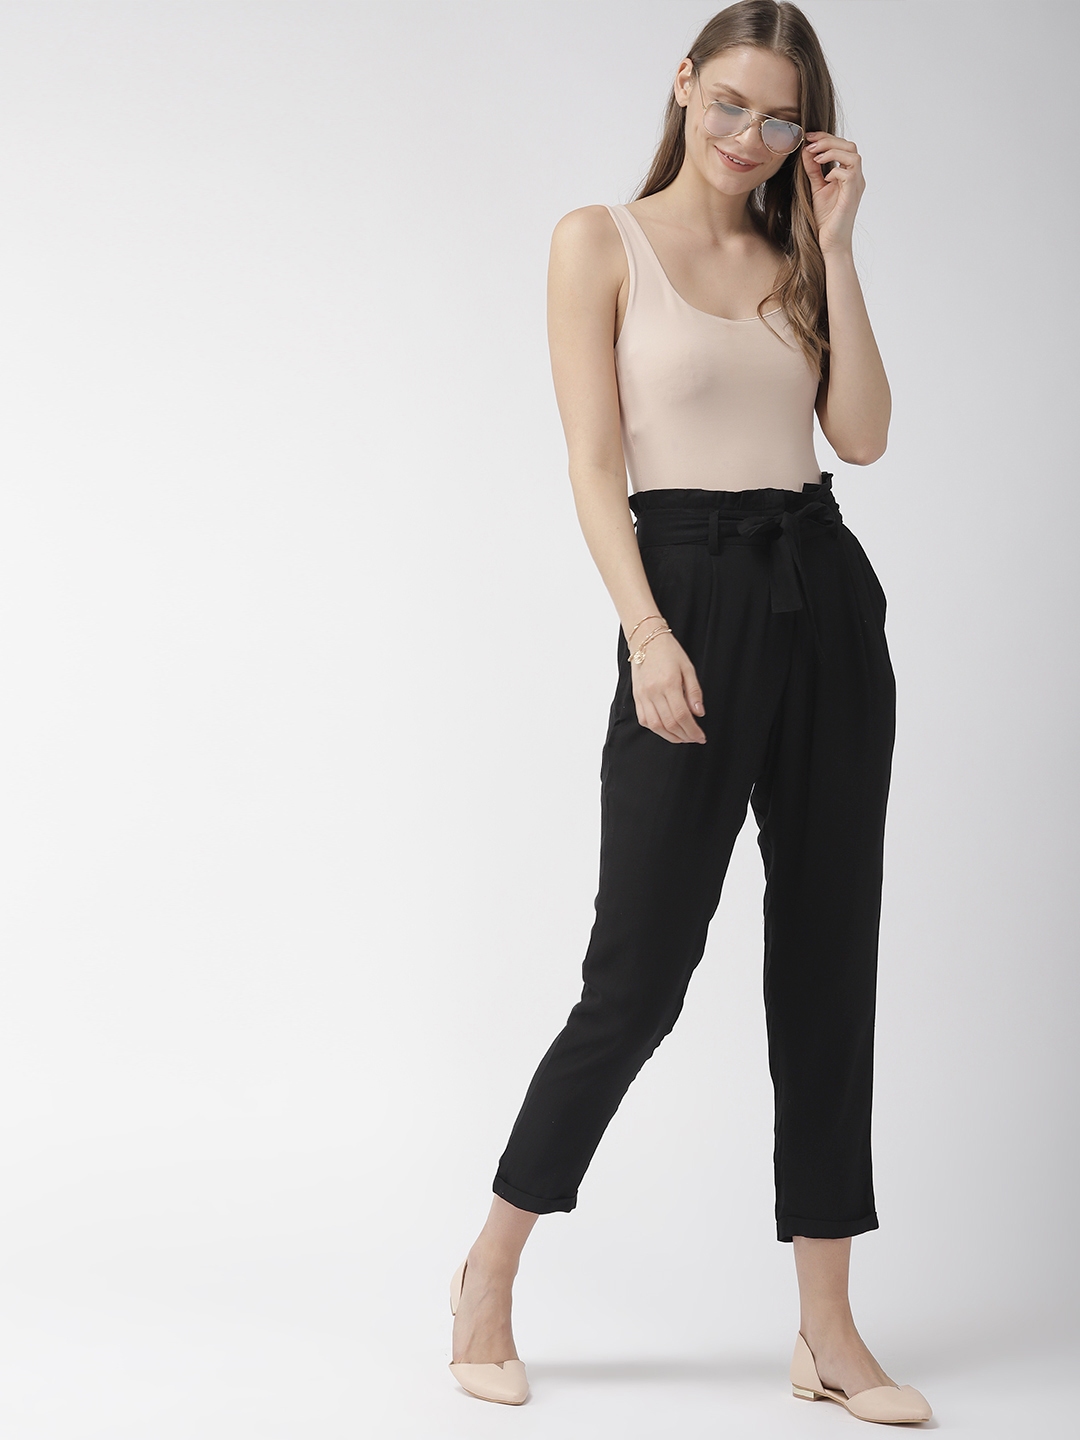 Womens Slim Black Color Peg Trousers online at Radhella